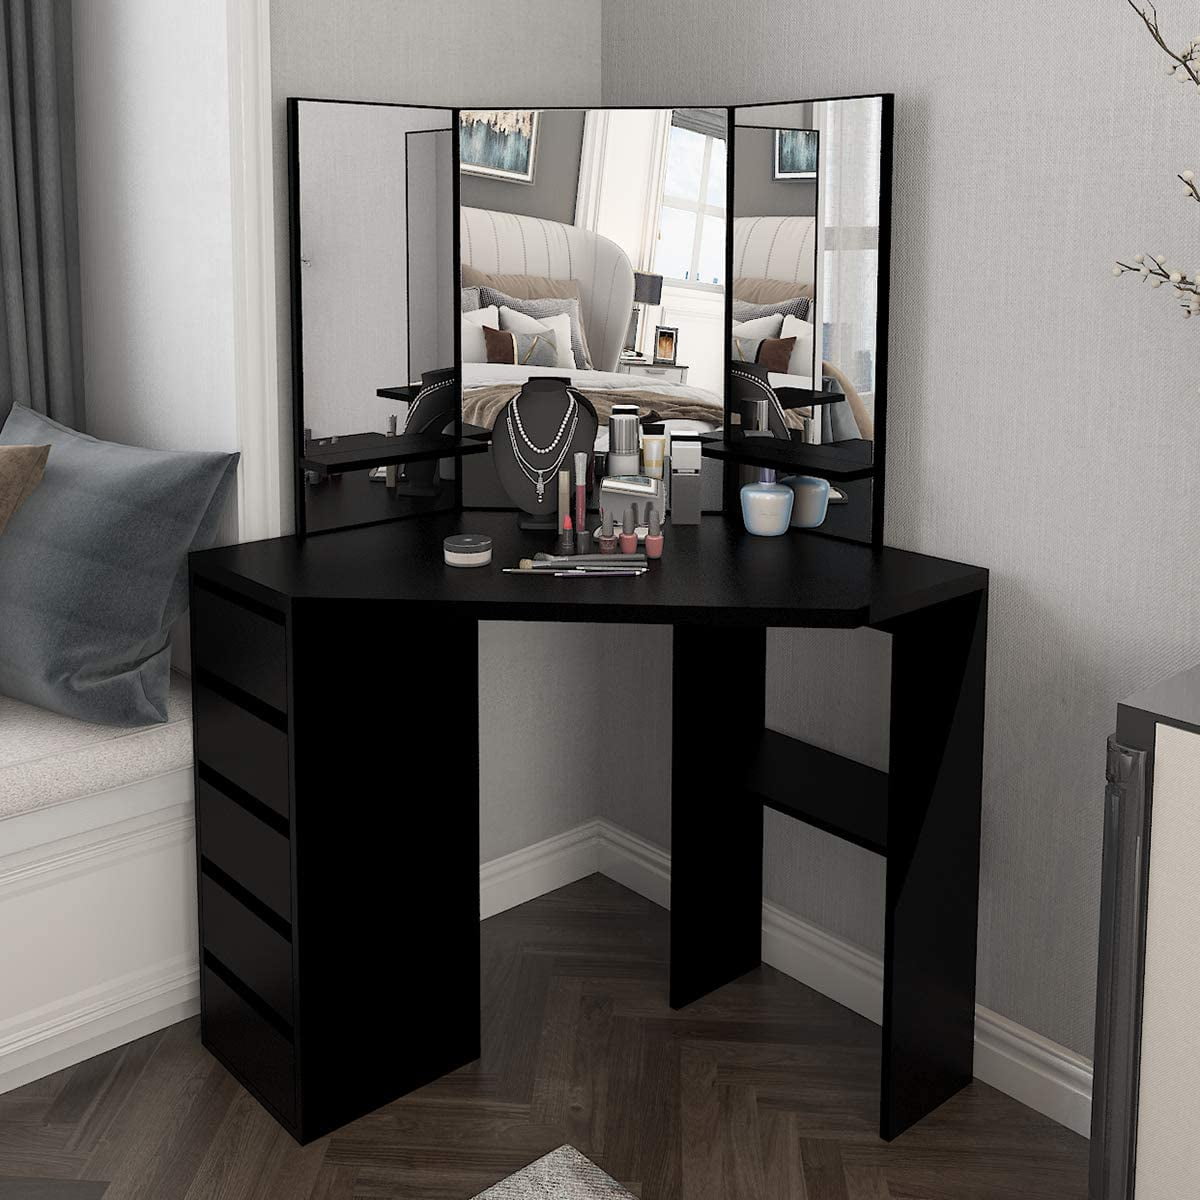 Black Wooden Corner Dressing Table With Mirror and Stool,5 Drawers Makeup Desk With Storage,Modern Vanity Dresser Set For Bedroom 